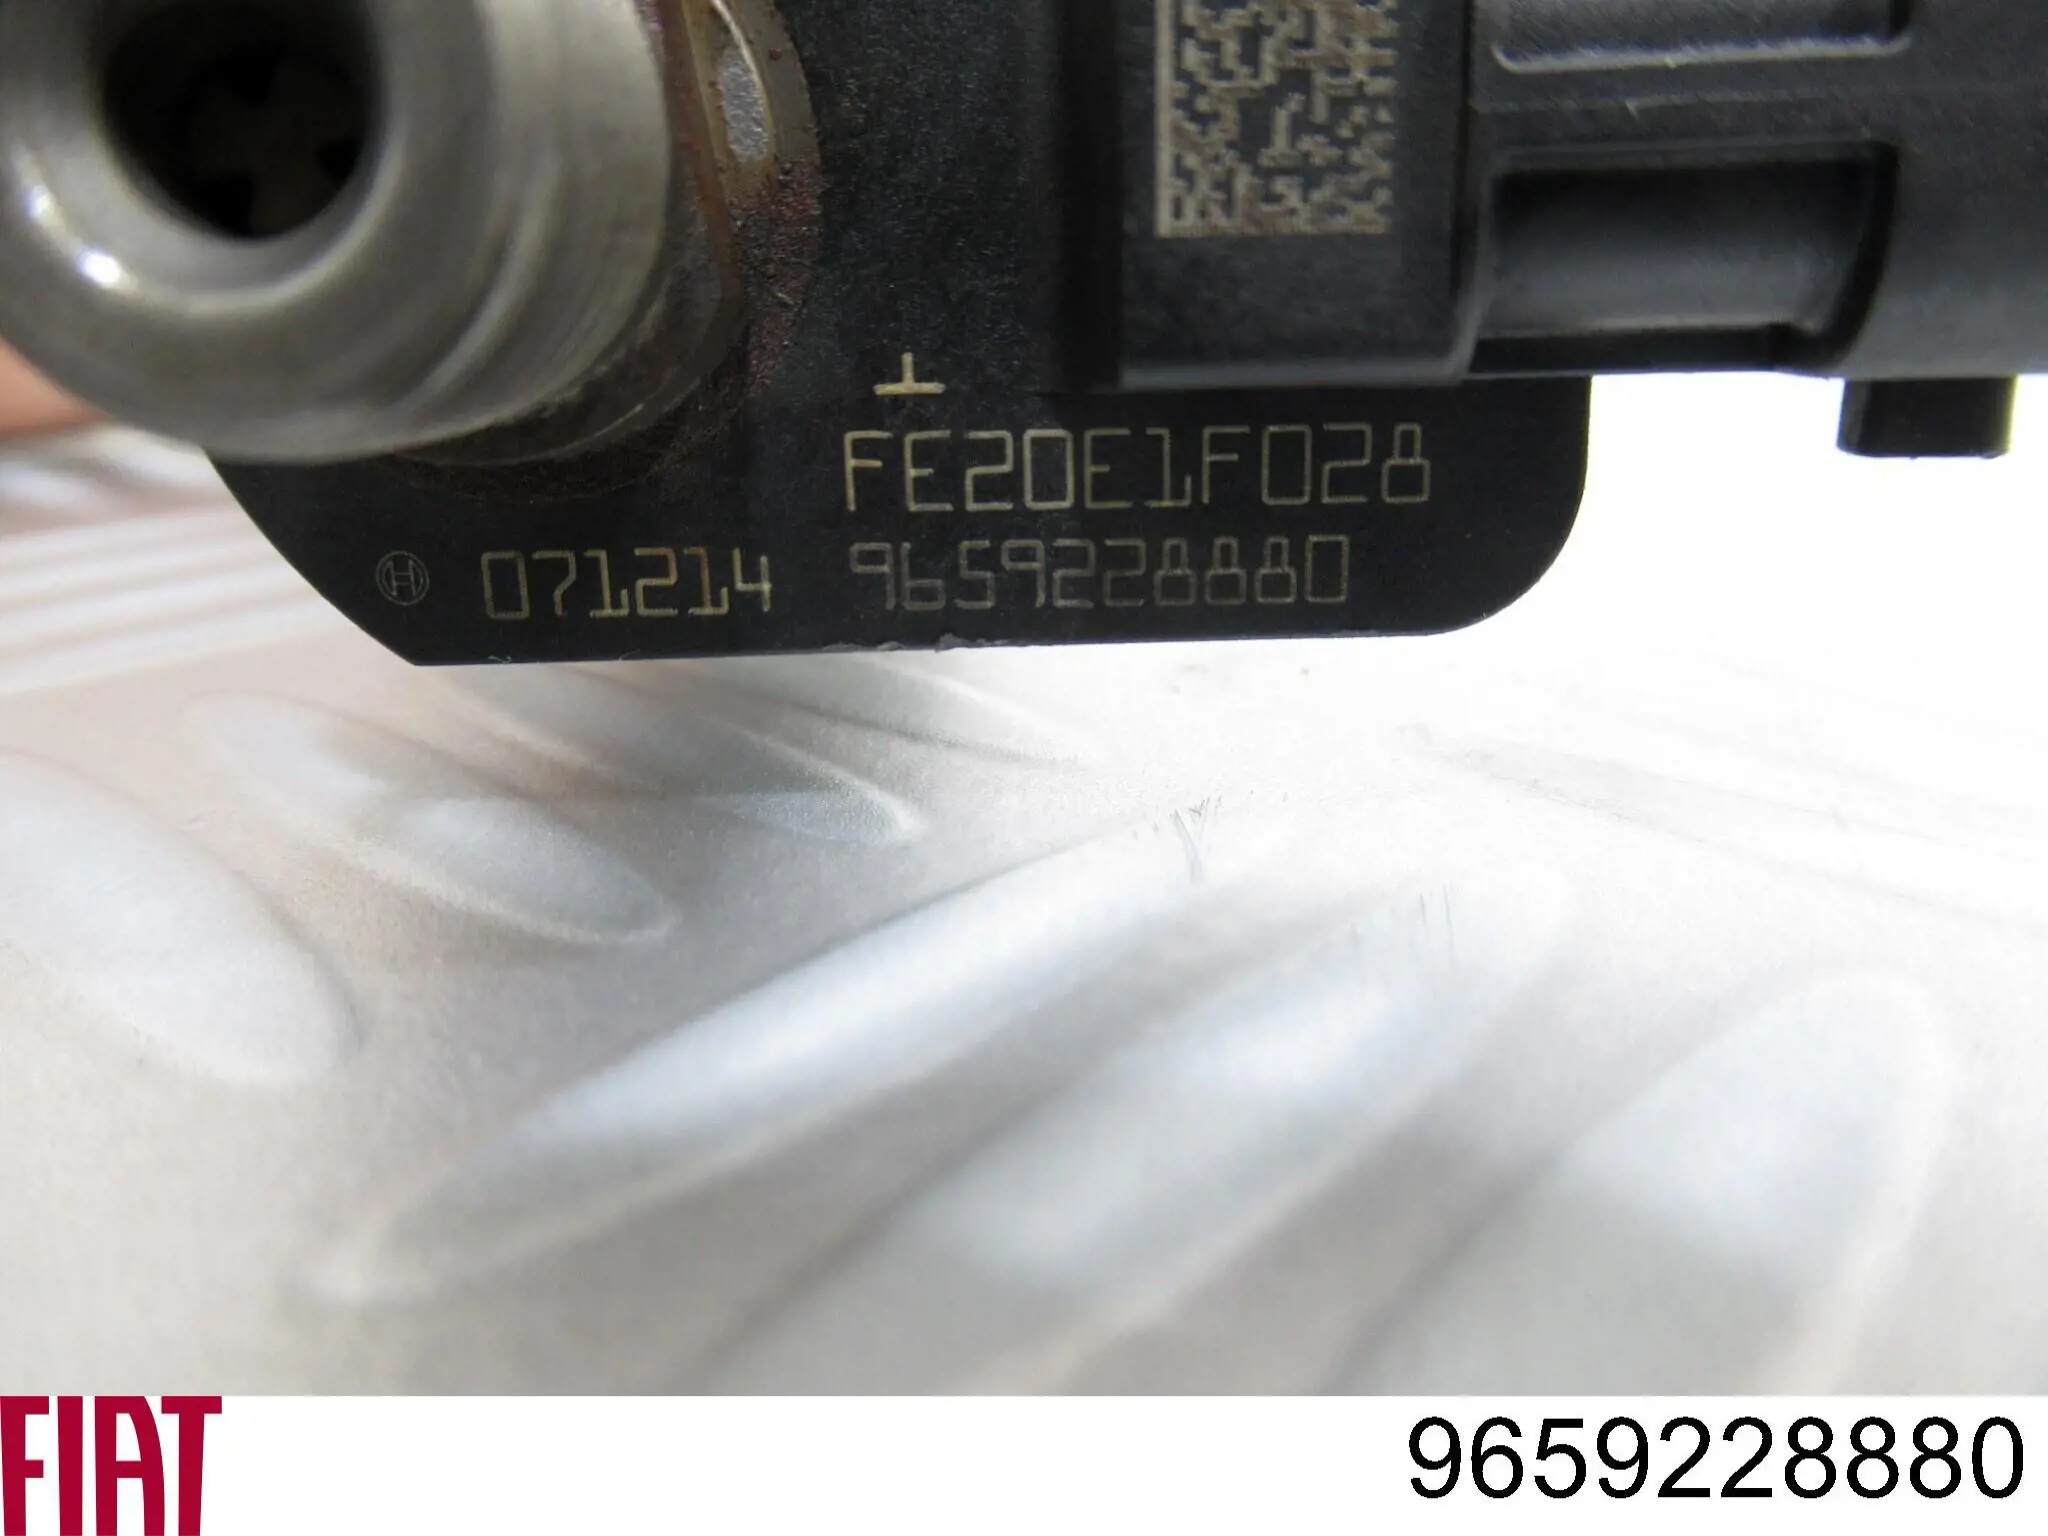 00001980J8 Peugeot/Citroen насос/форсунка